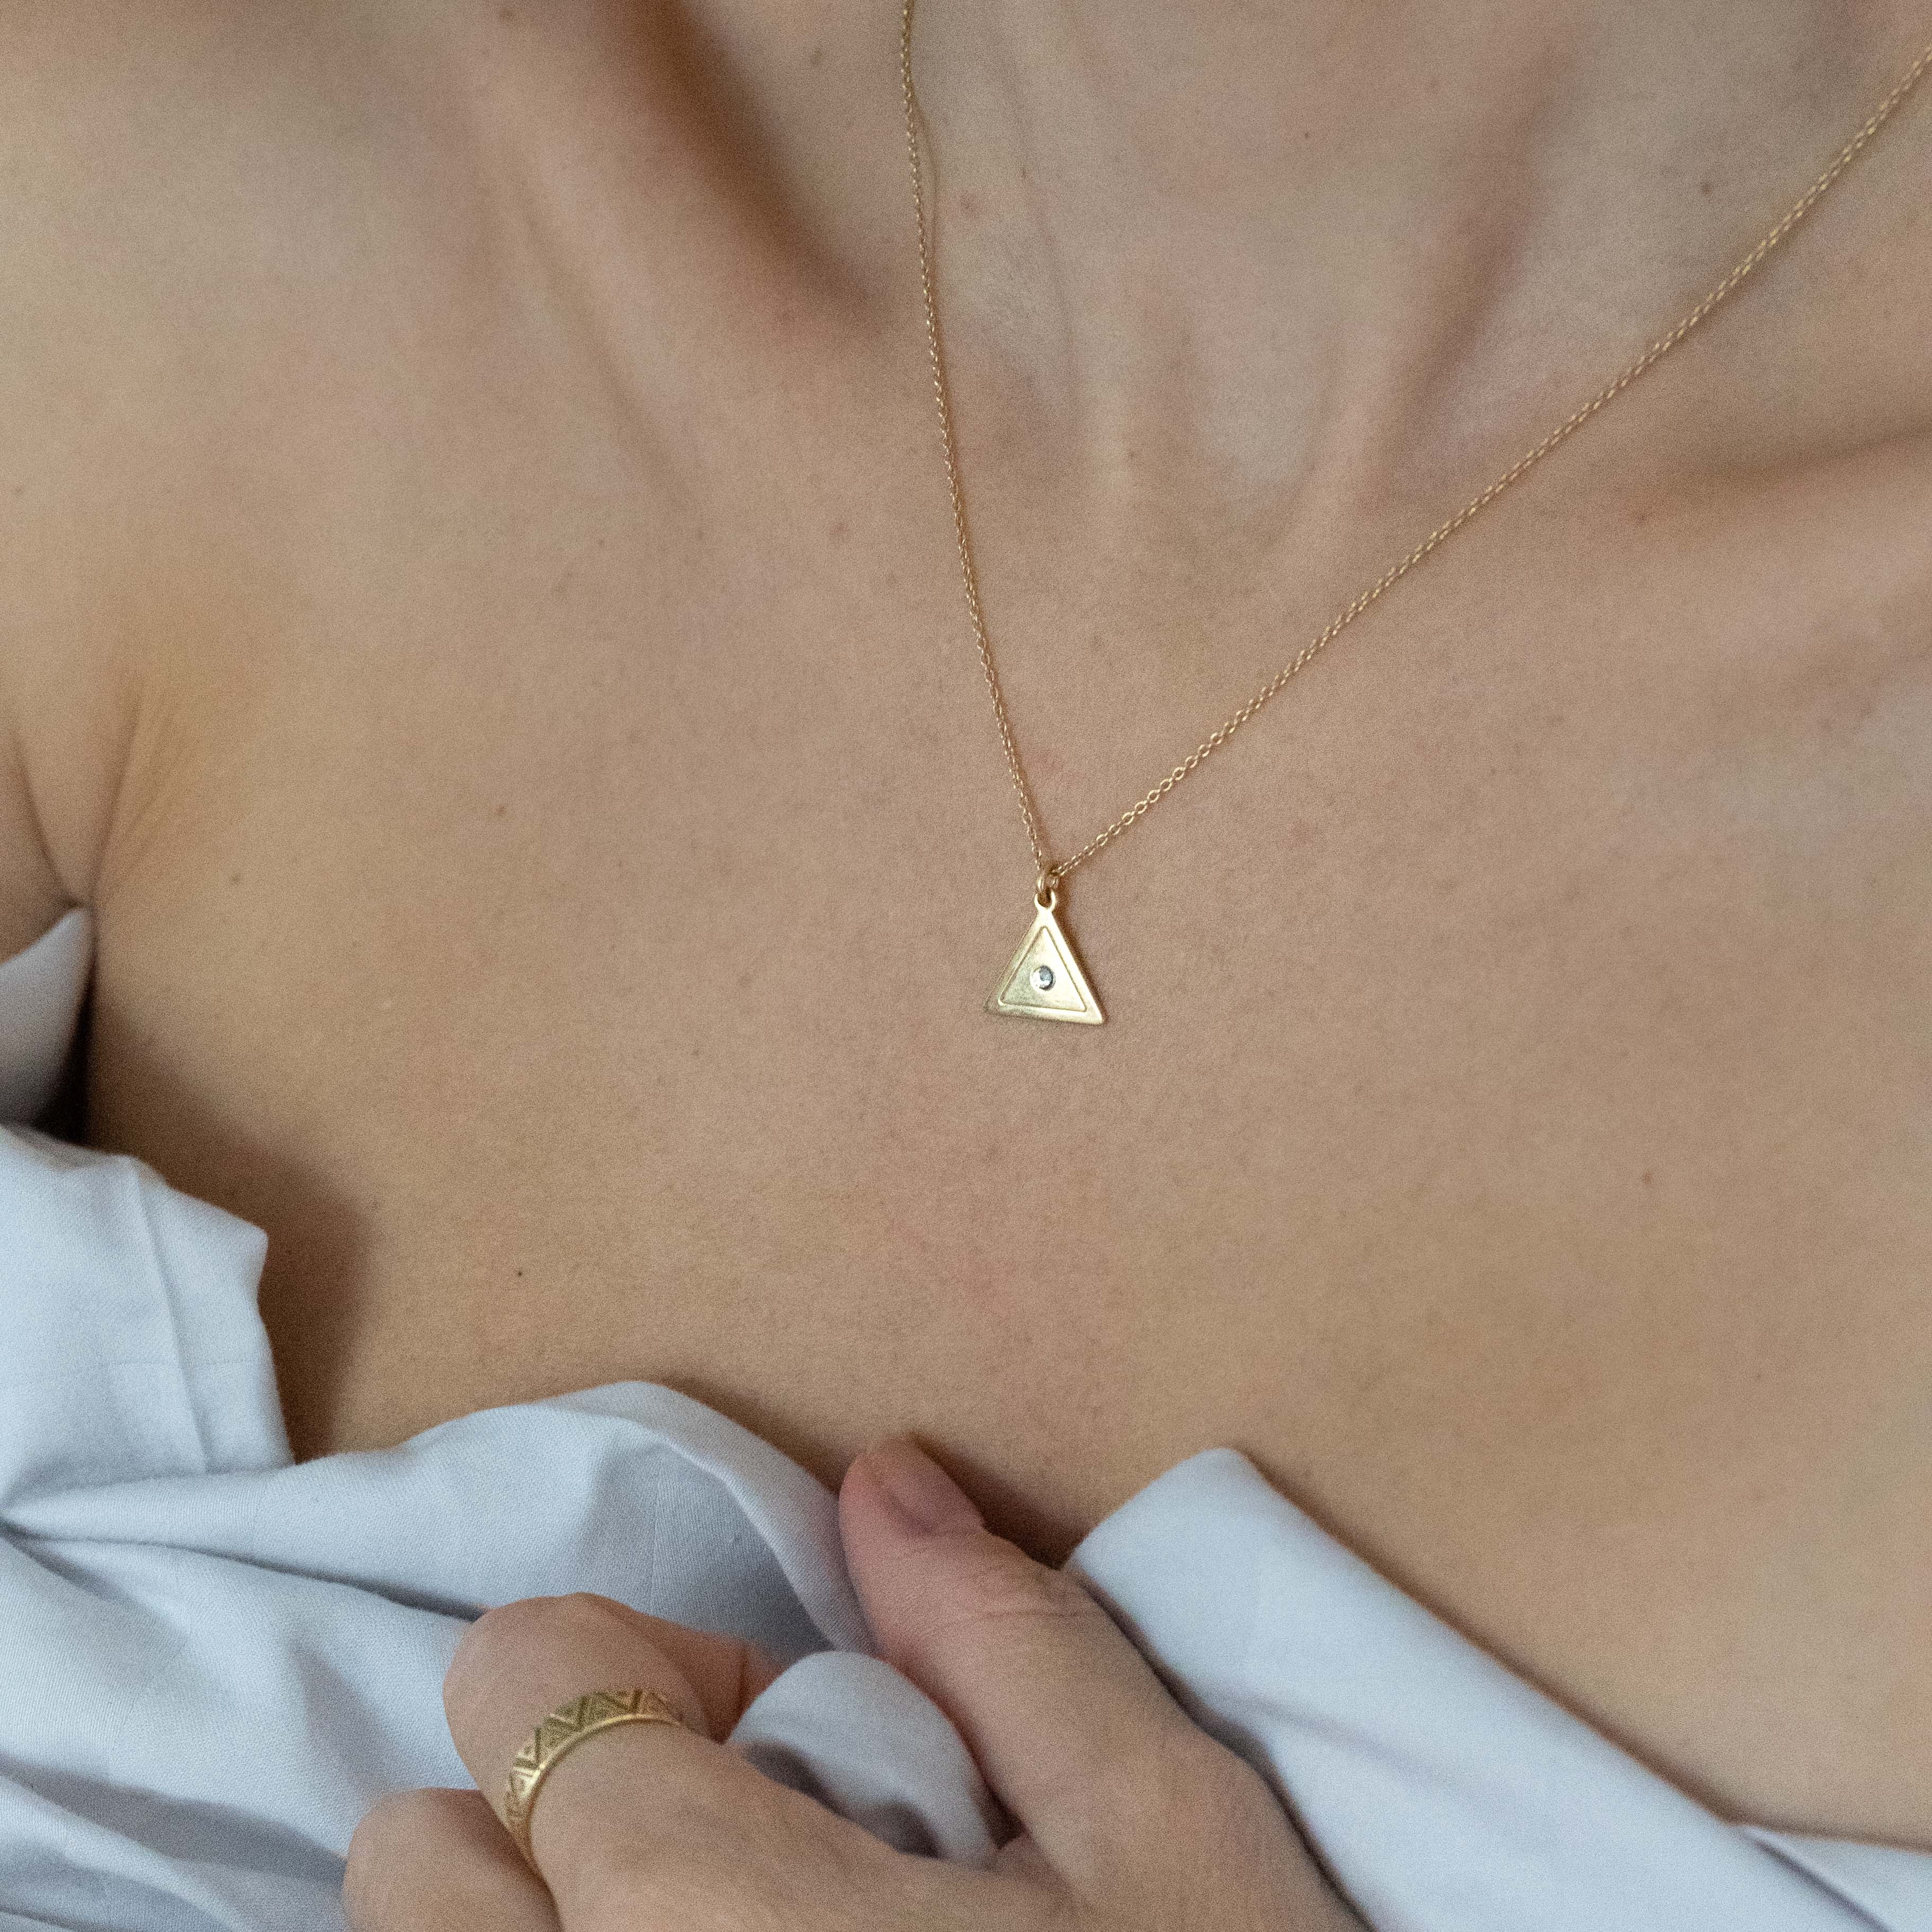 Triangle pendant necklace - Bermuda, Sky&Co, sterling silver 925